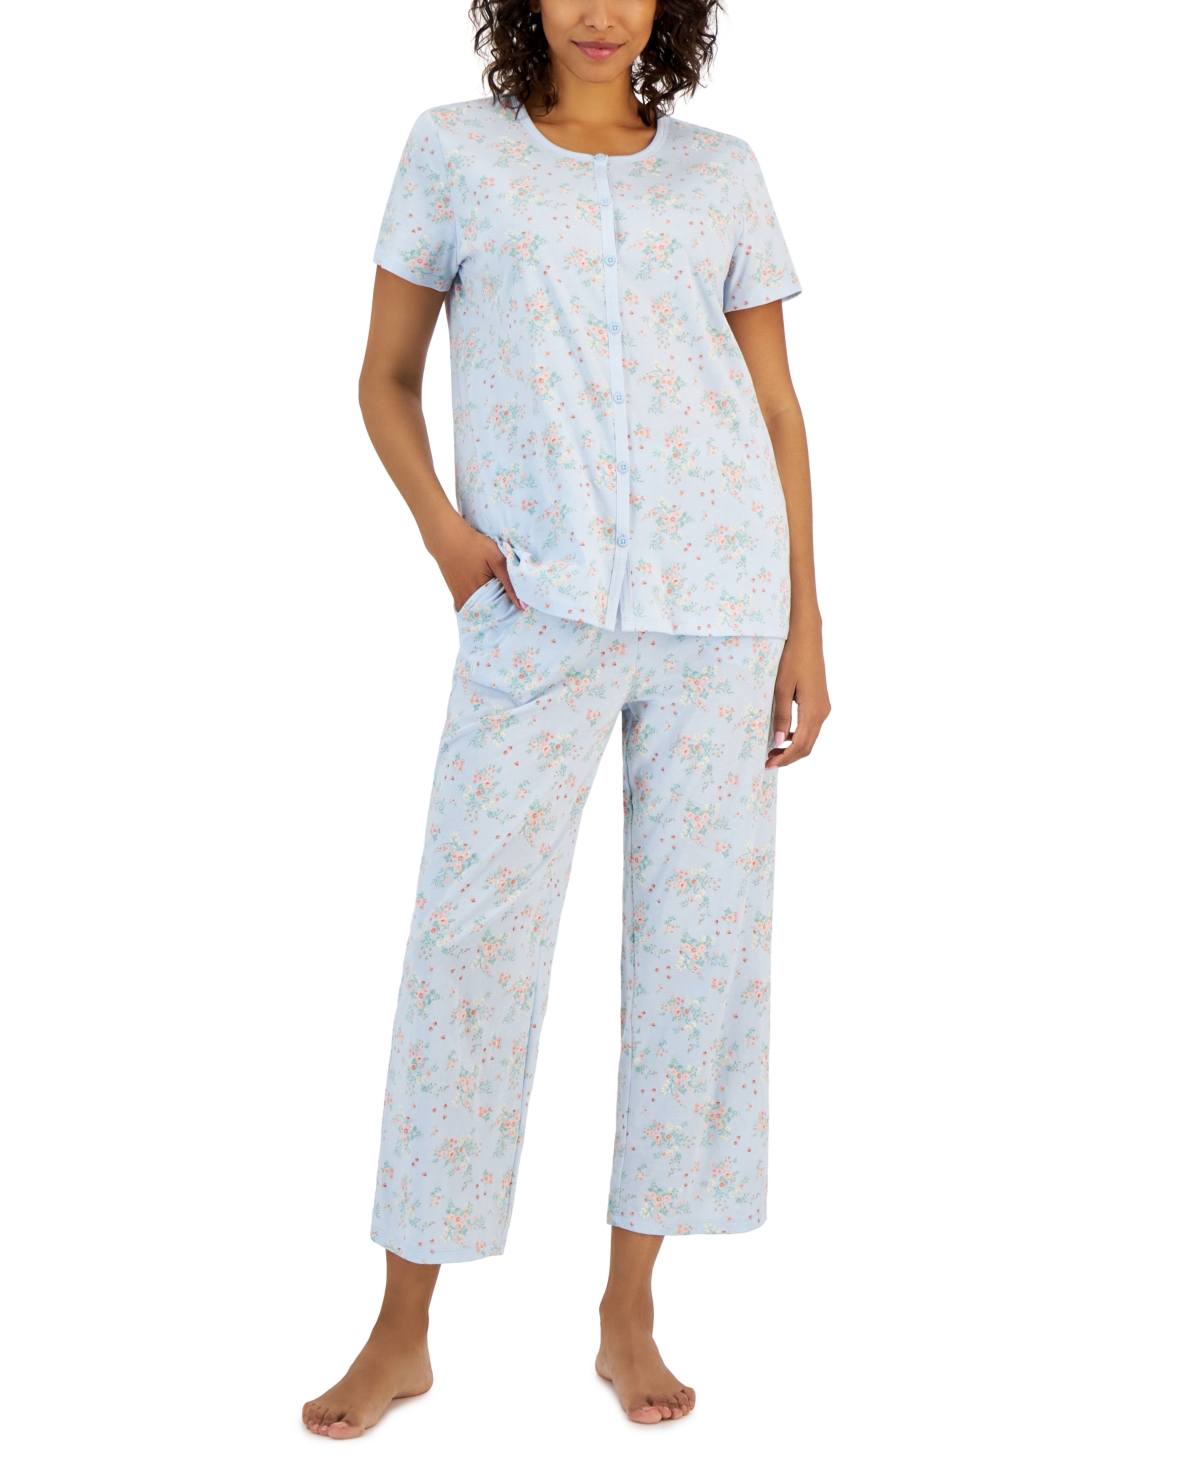 Charter Club Short Sleeve Top and Capri Pant Cotton Pajama Set